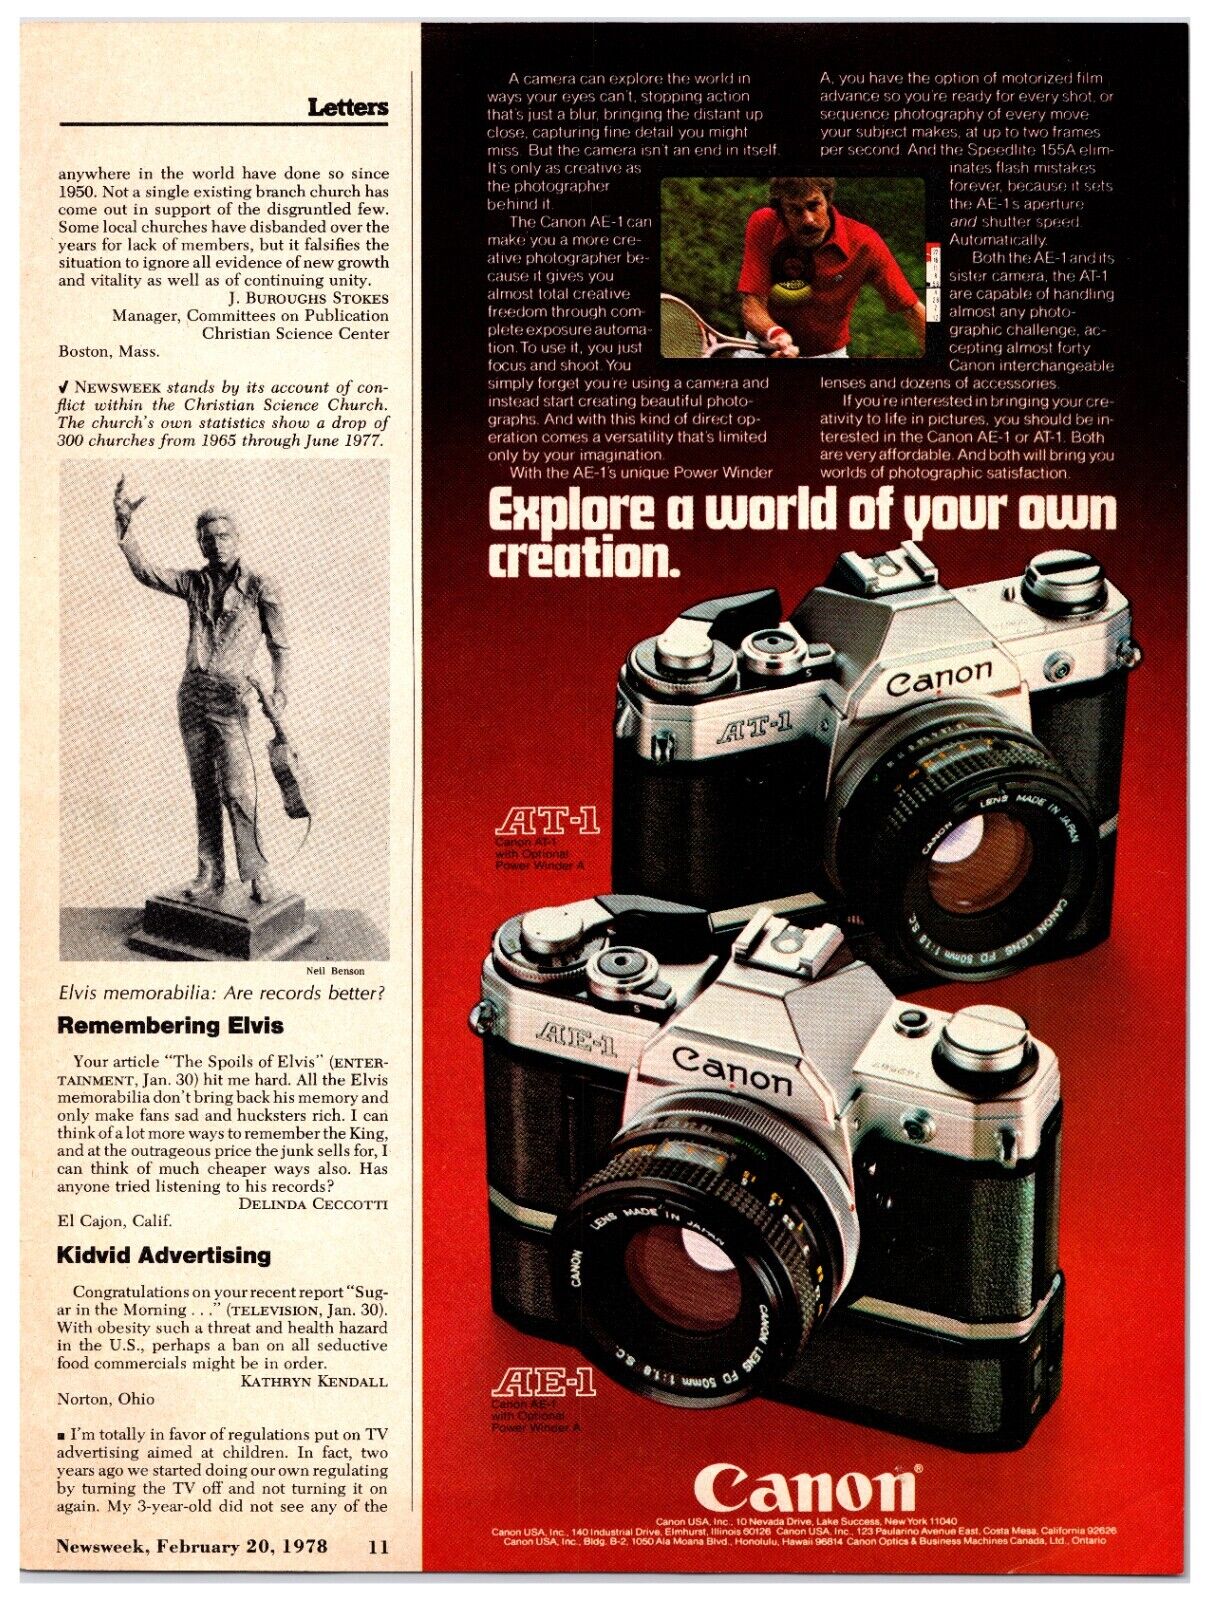 1978 Canon 35mm Film Camera Original Print Advertisement (11 x 5.5)